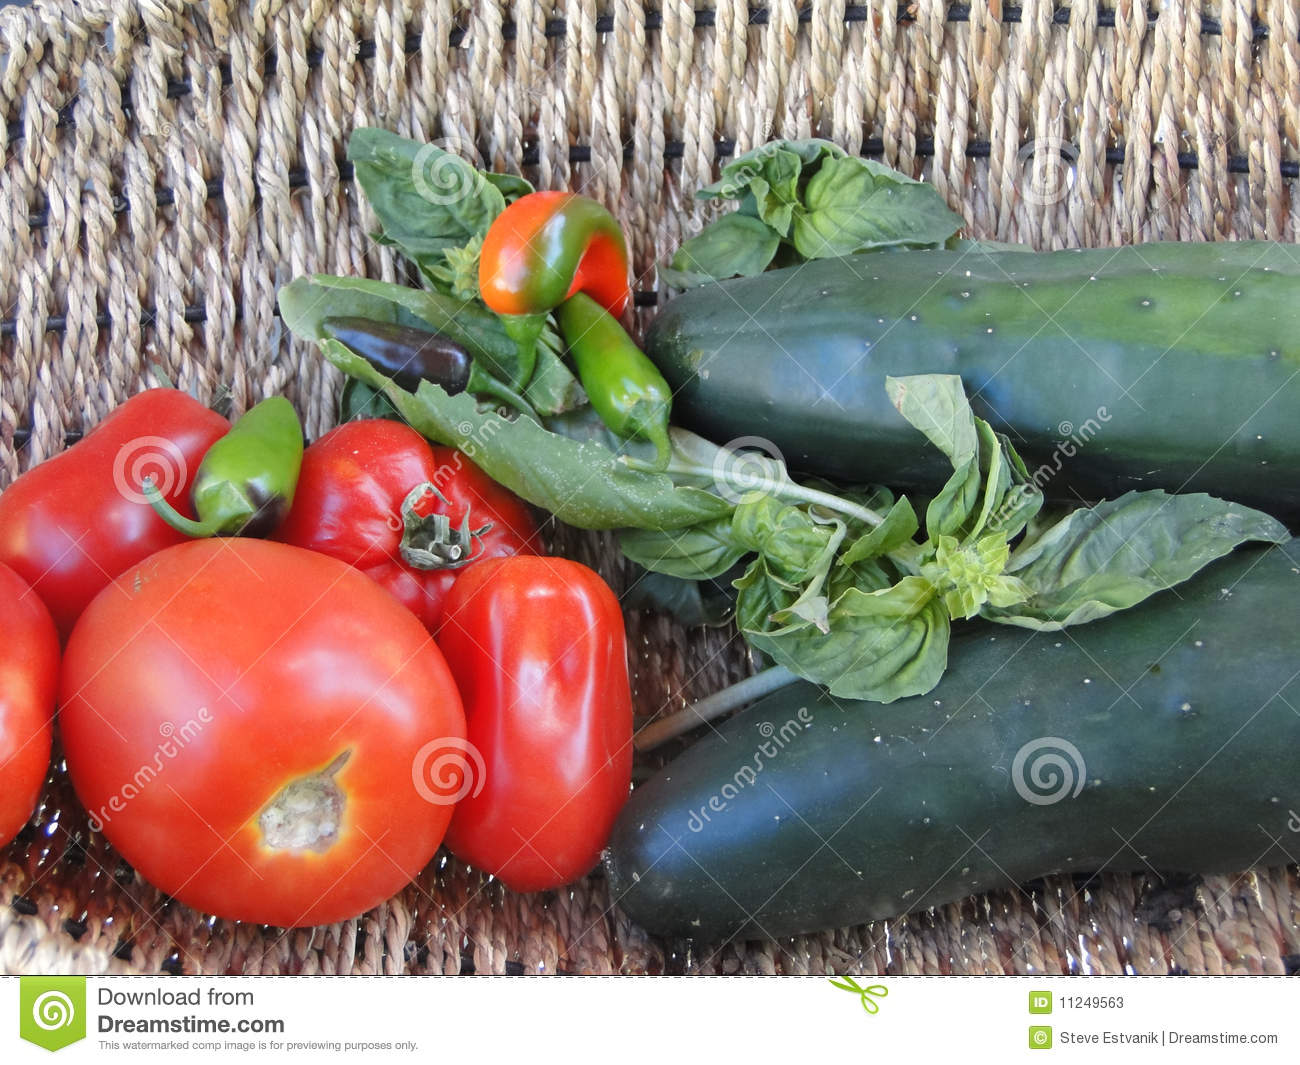 Summer Bounty   Fresh Vegetables In A Woven Basket Seattle Garden